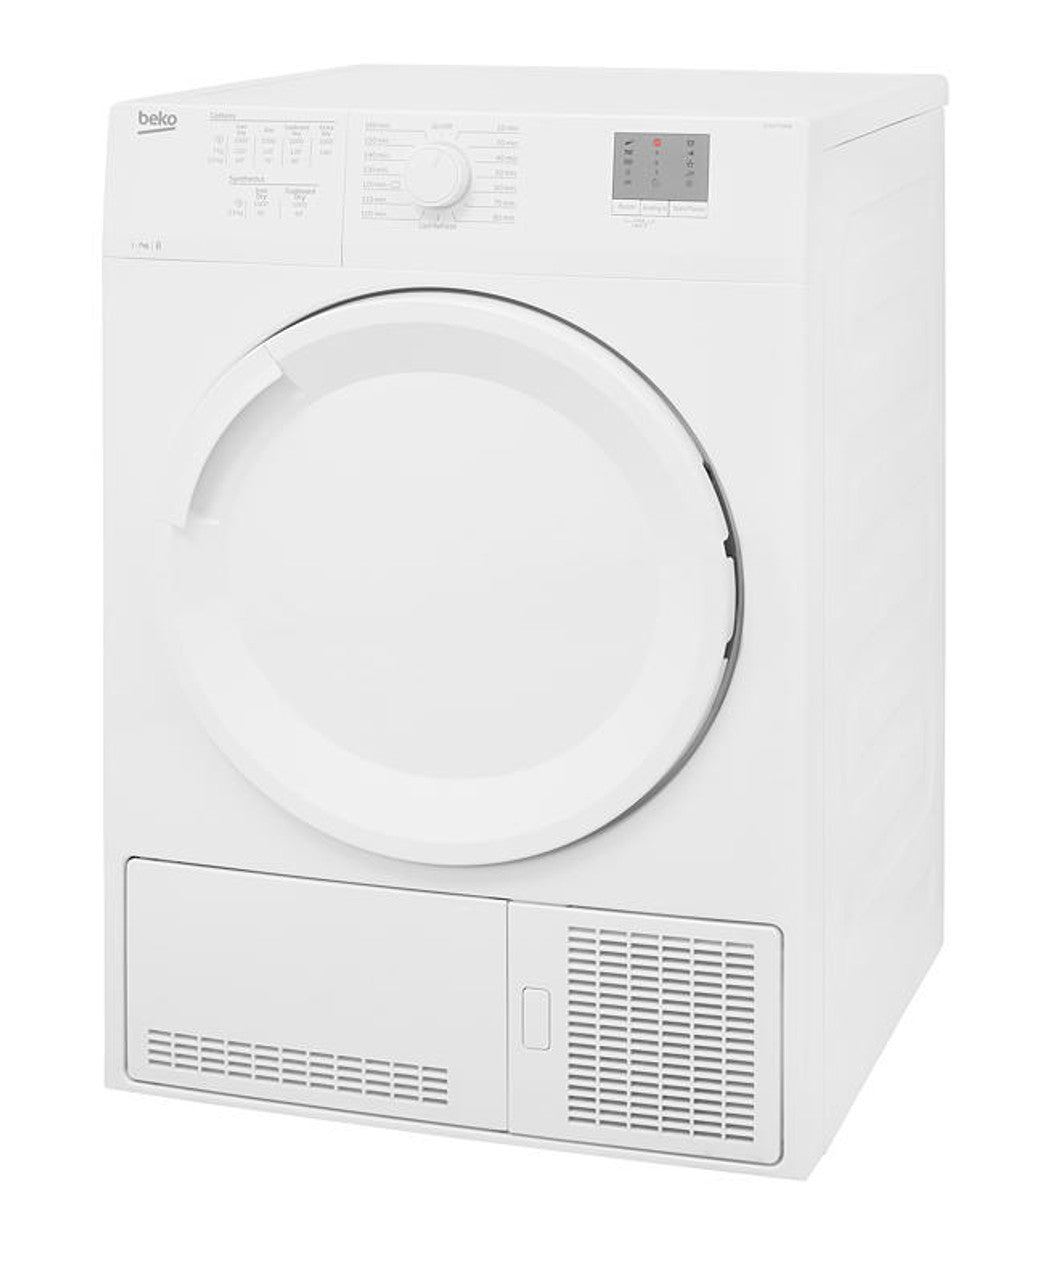 Beko DTGCT7000W 7kg Condenser Tumble Dryer - White